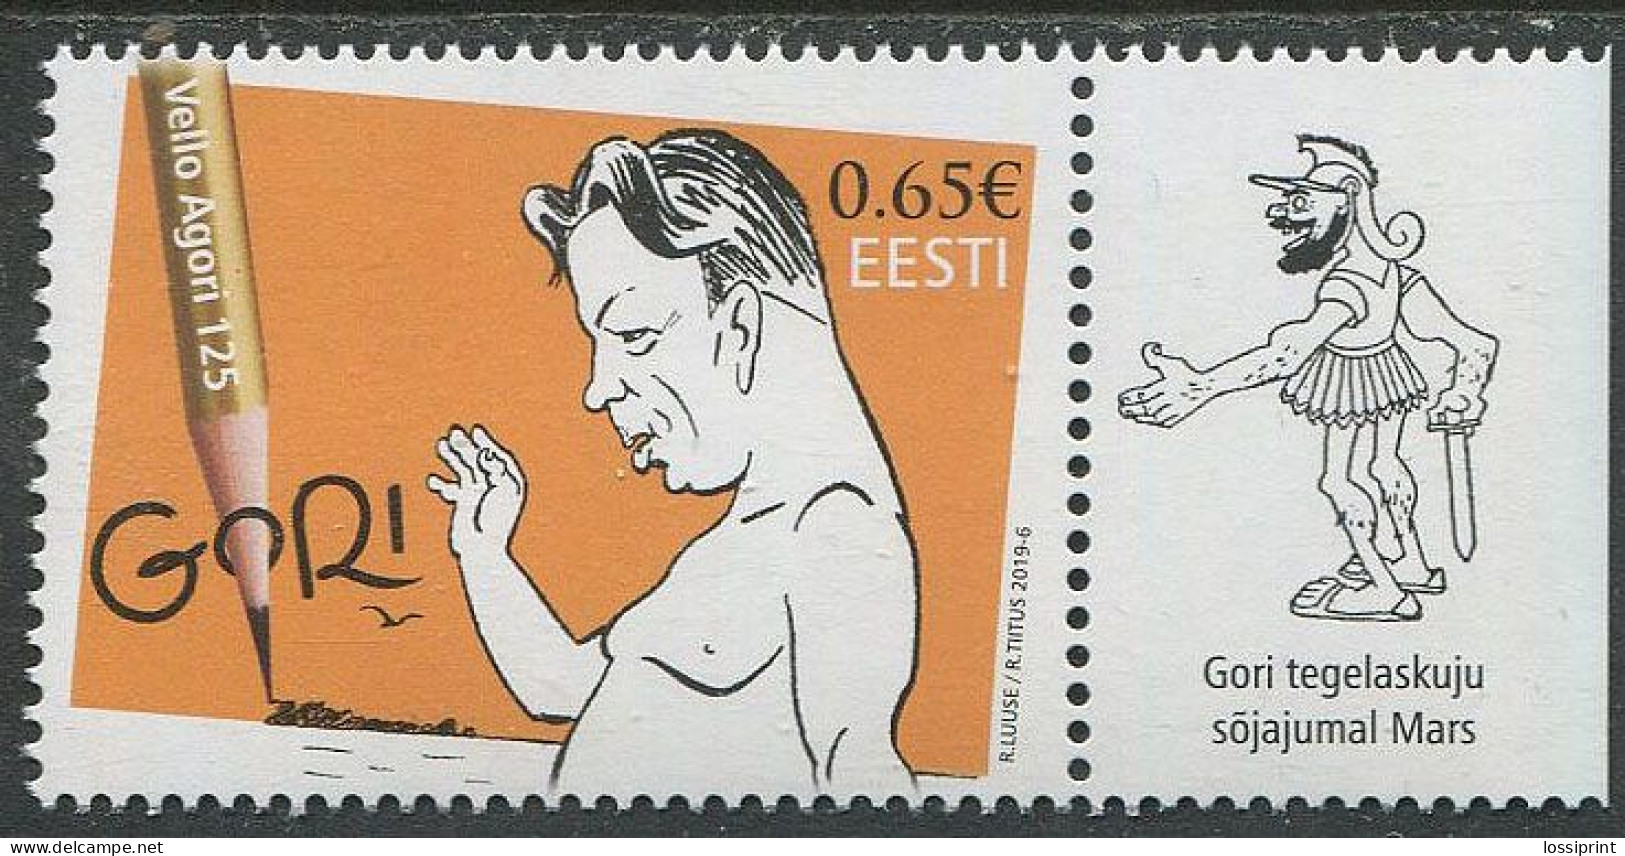 Estonia:Unused Stamp Vello Aguri 125 Years From Birth, GORI, 2019, MNH - Estland